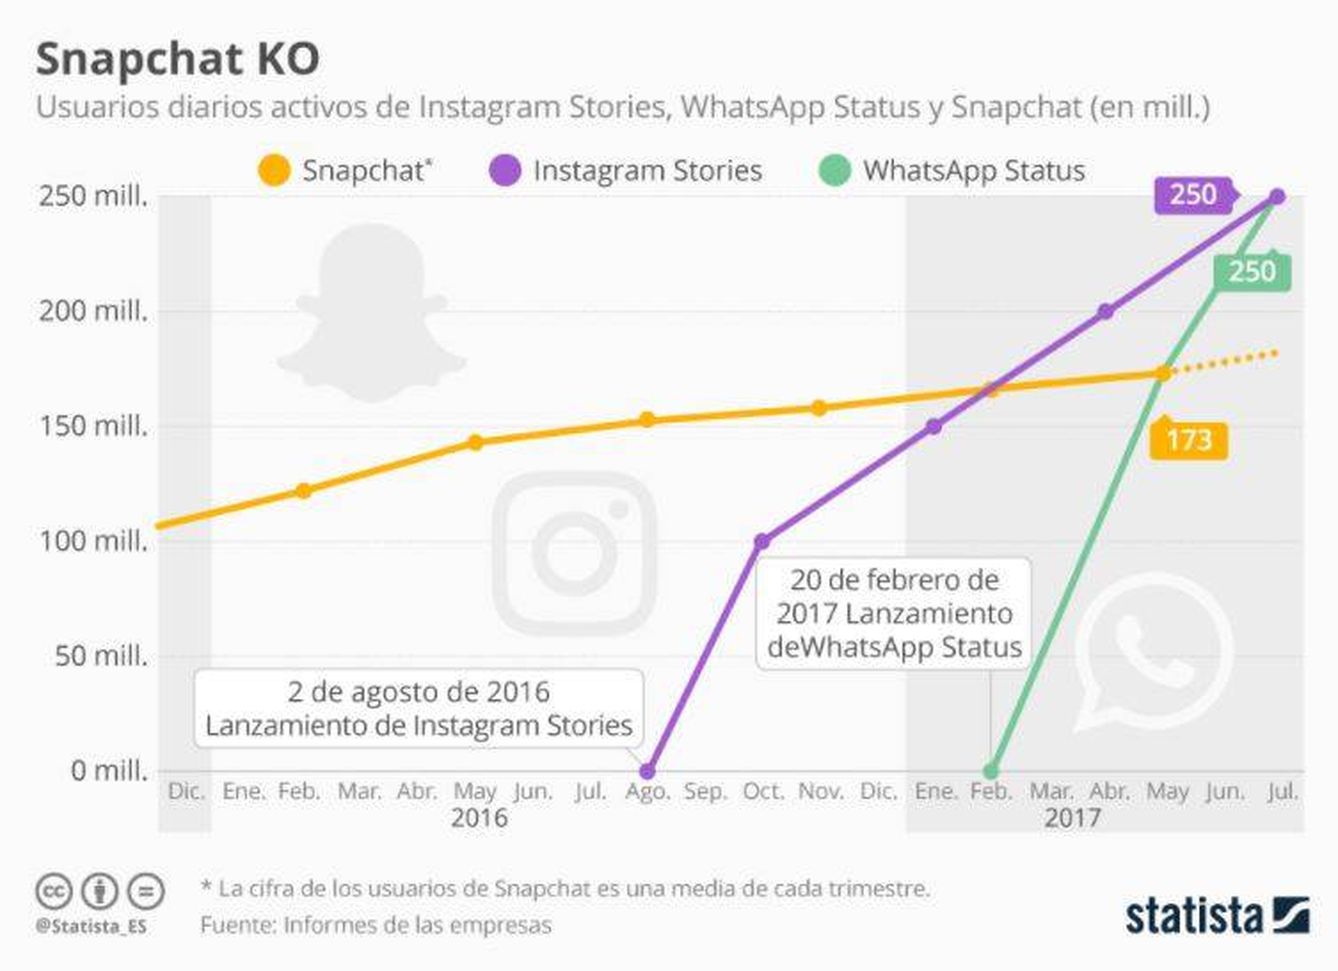 Usuarios diarios de Instagram Stories, Whatsapp Status y Snapchat. (Statista)